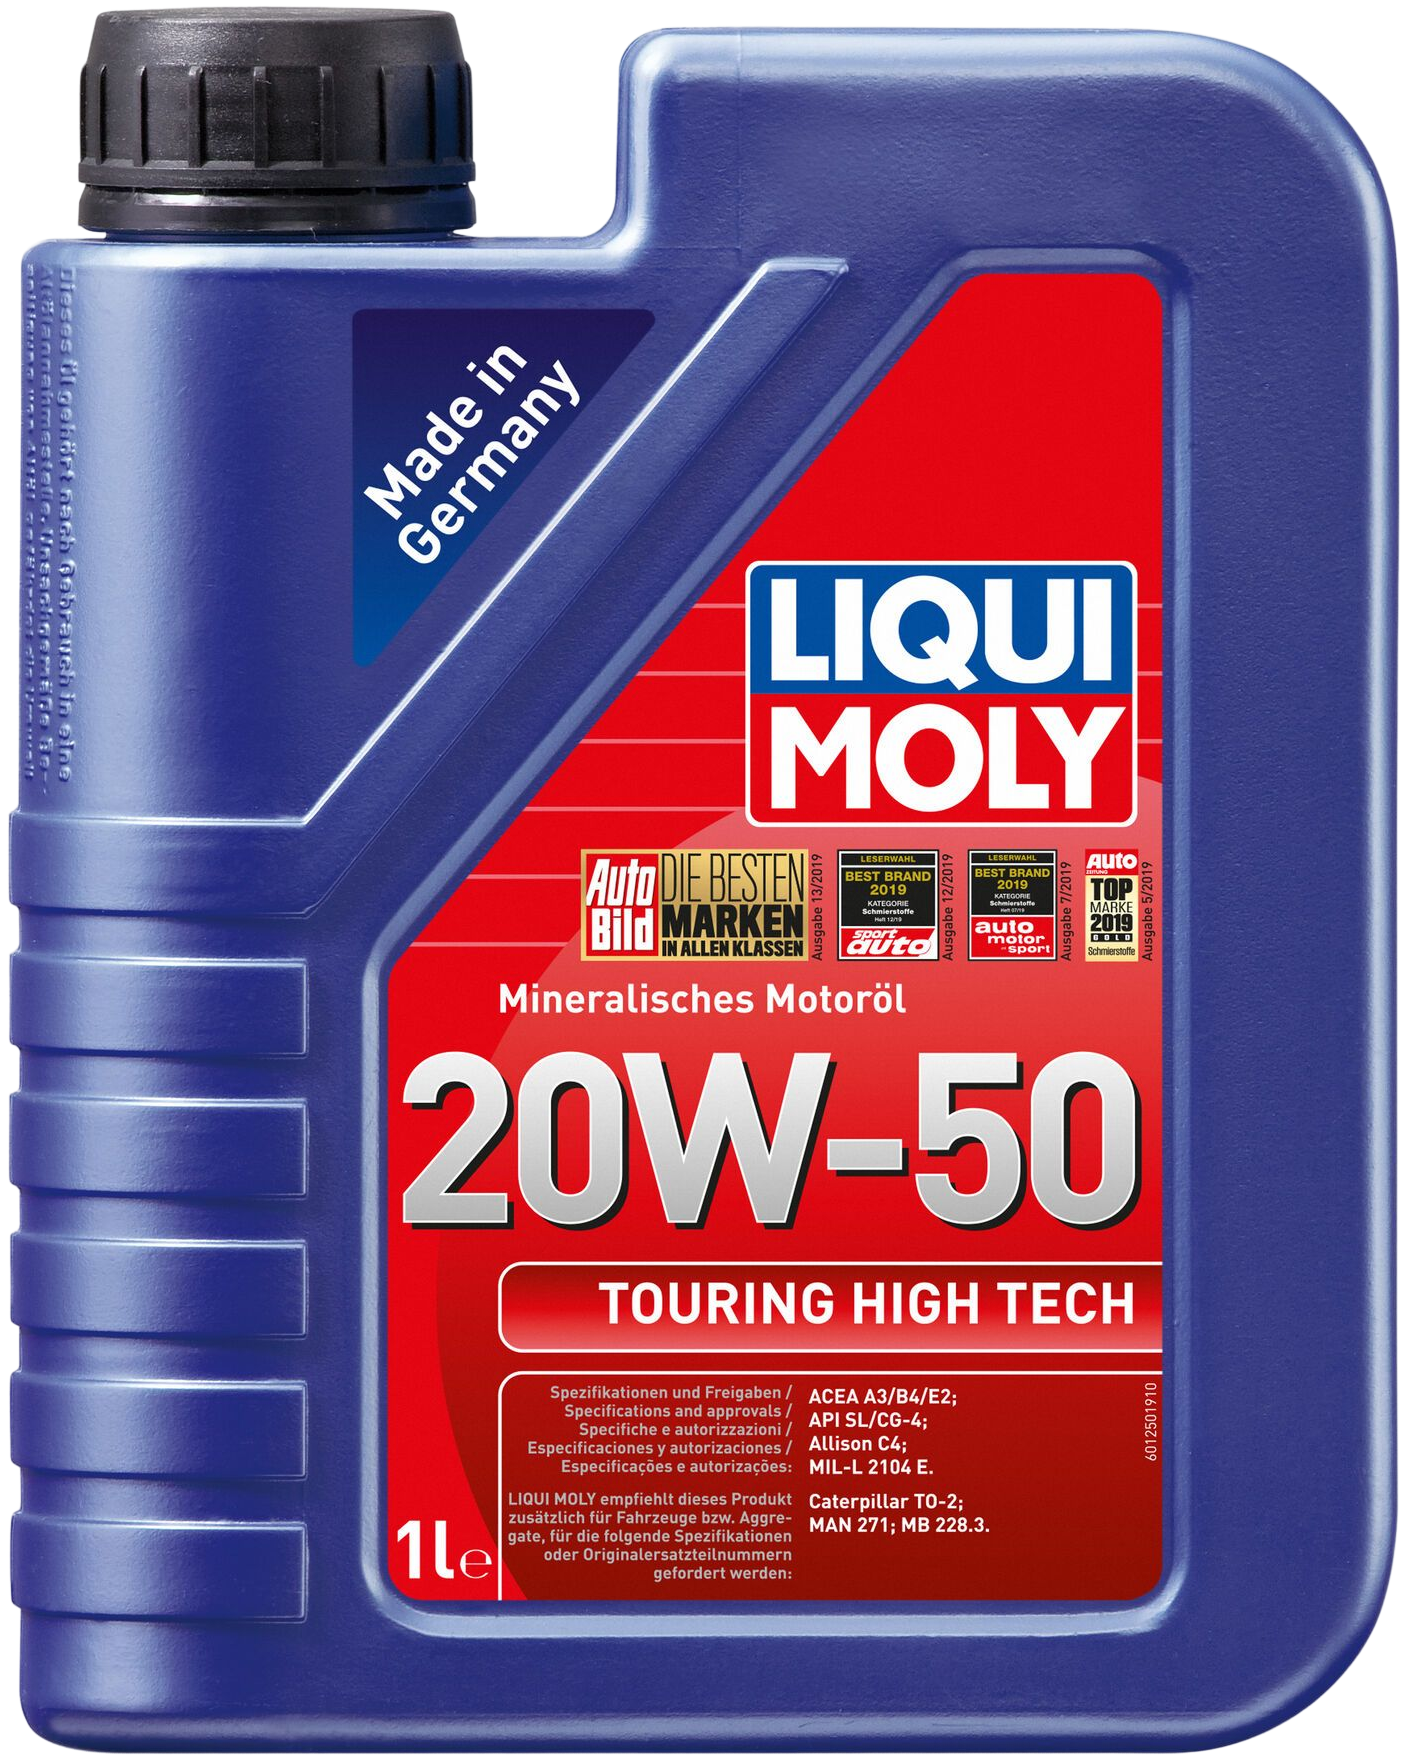 Liqui Moly Touring High Tech 20W-50, 6 x 1 lt detail 2